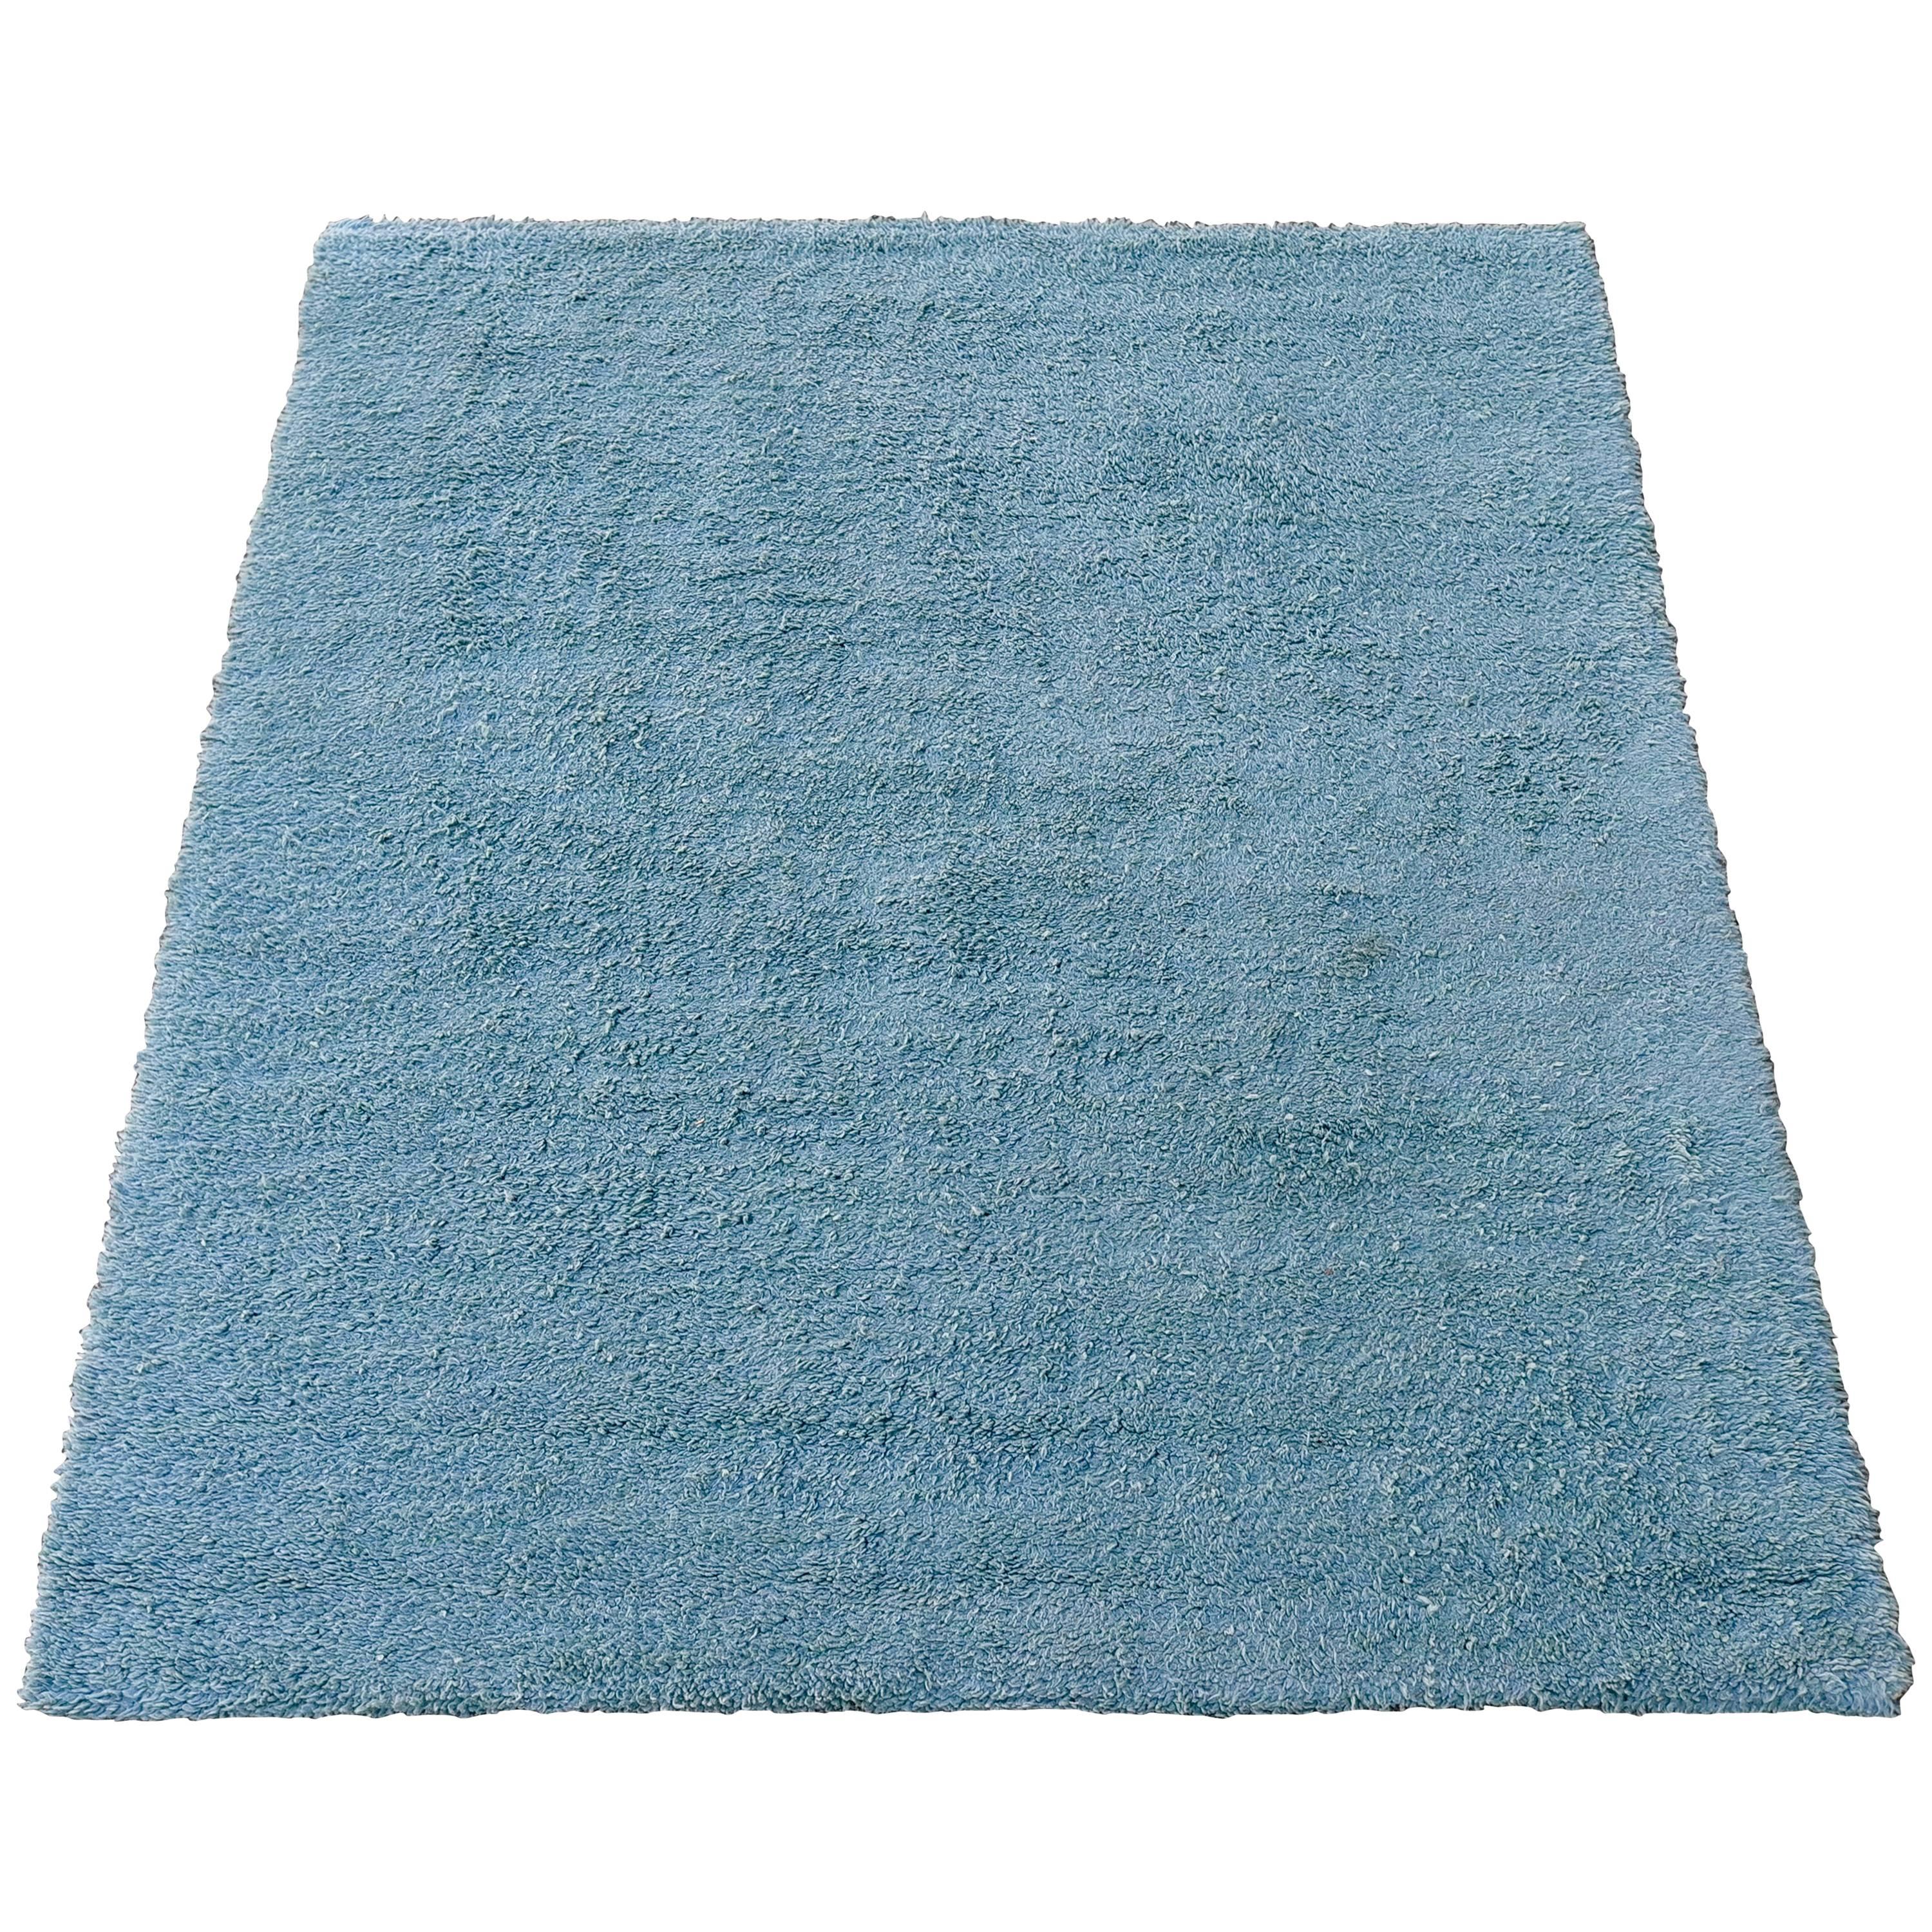 Carpet in blue Petrol Wool , 1950's